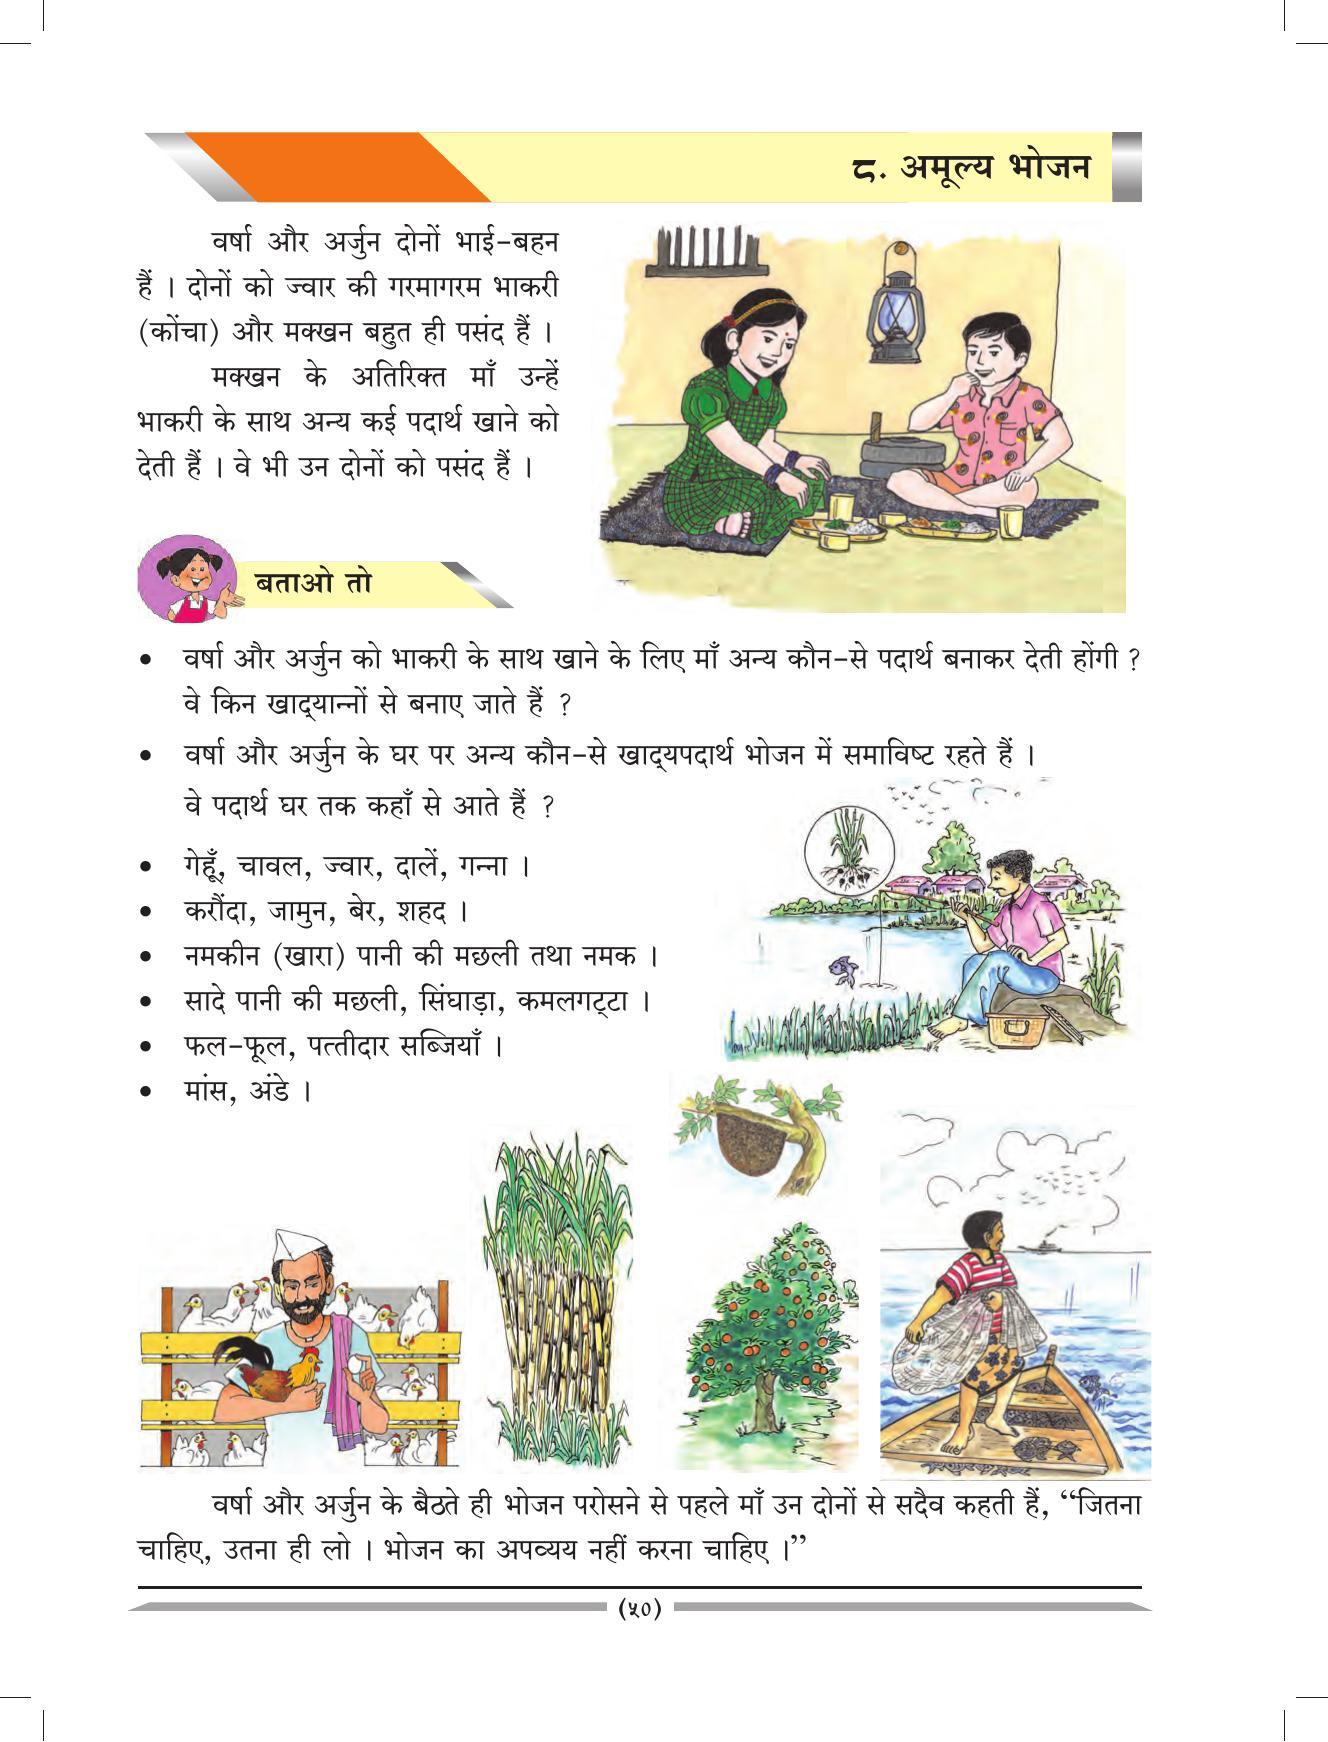 Maharashtra Board Class 4 EVS 1 (Hindi Medium) Textbook - Page 60